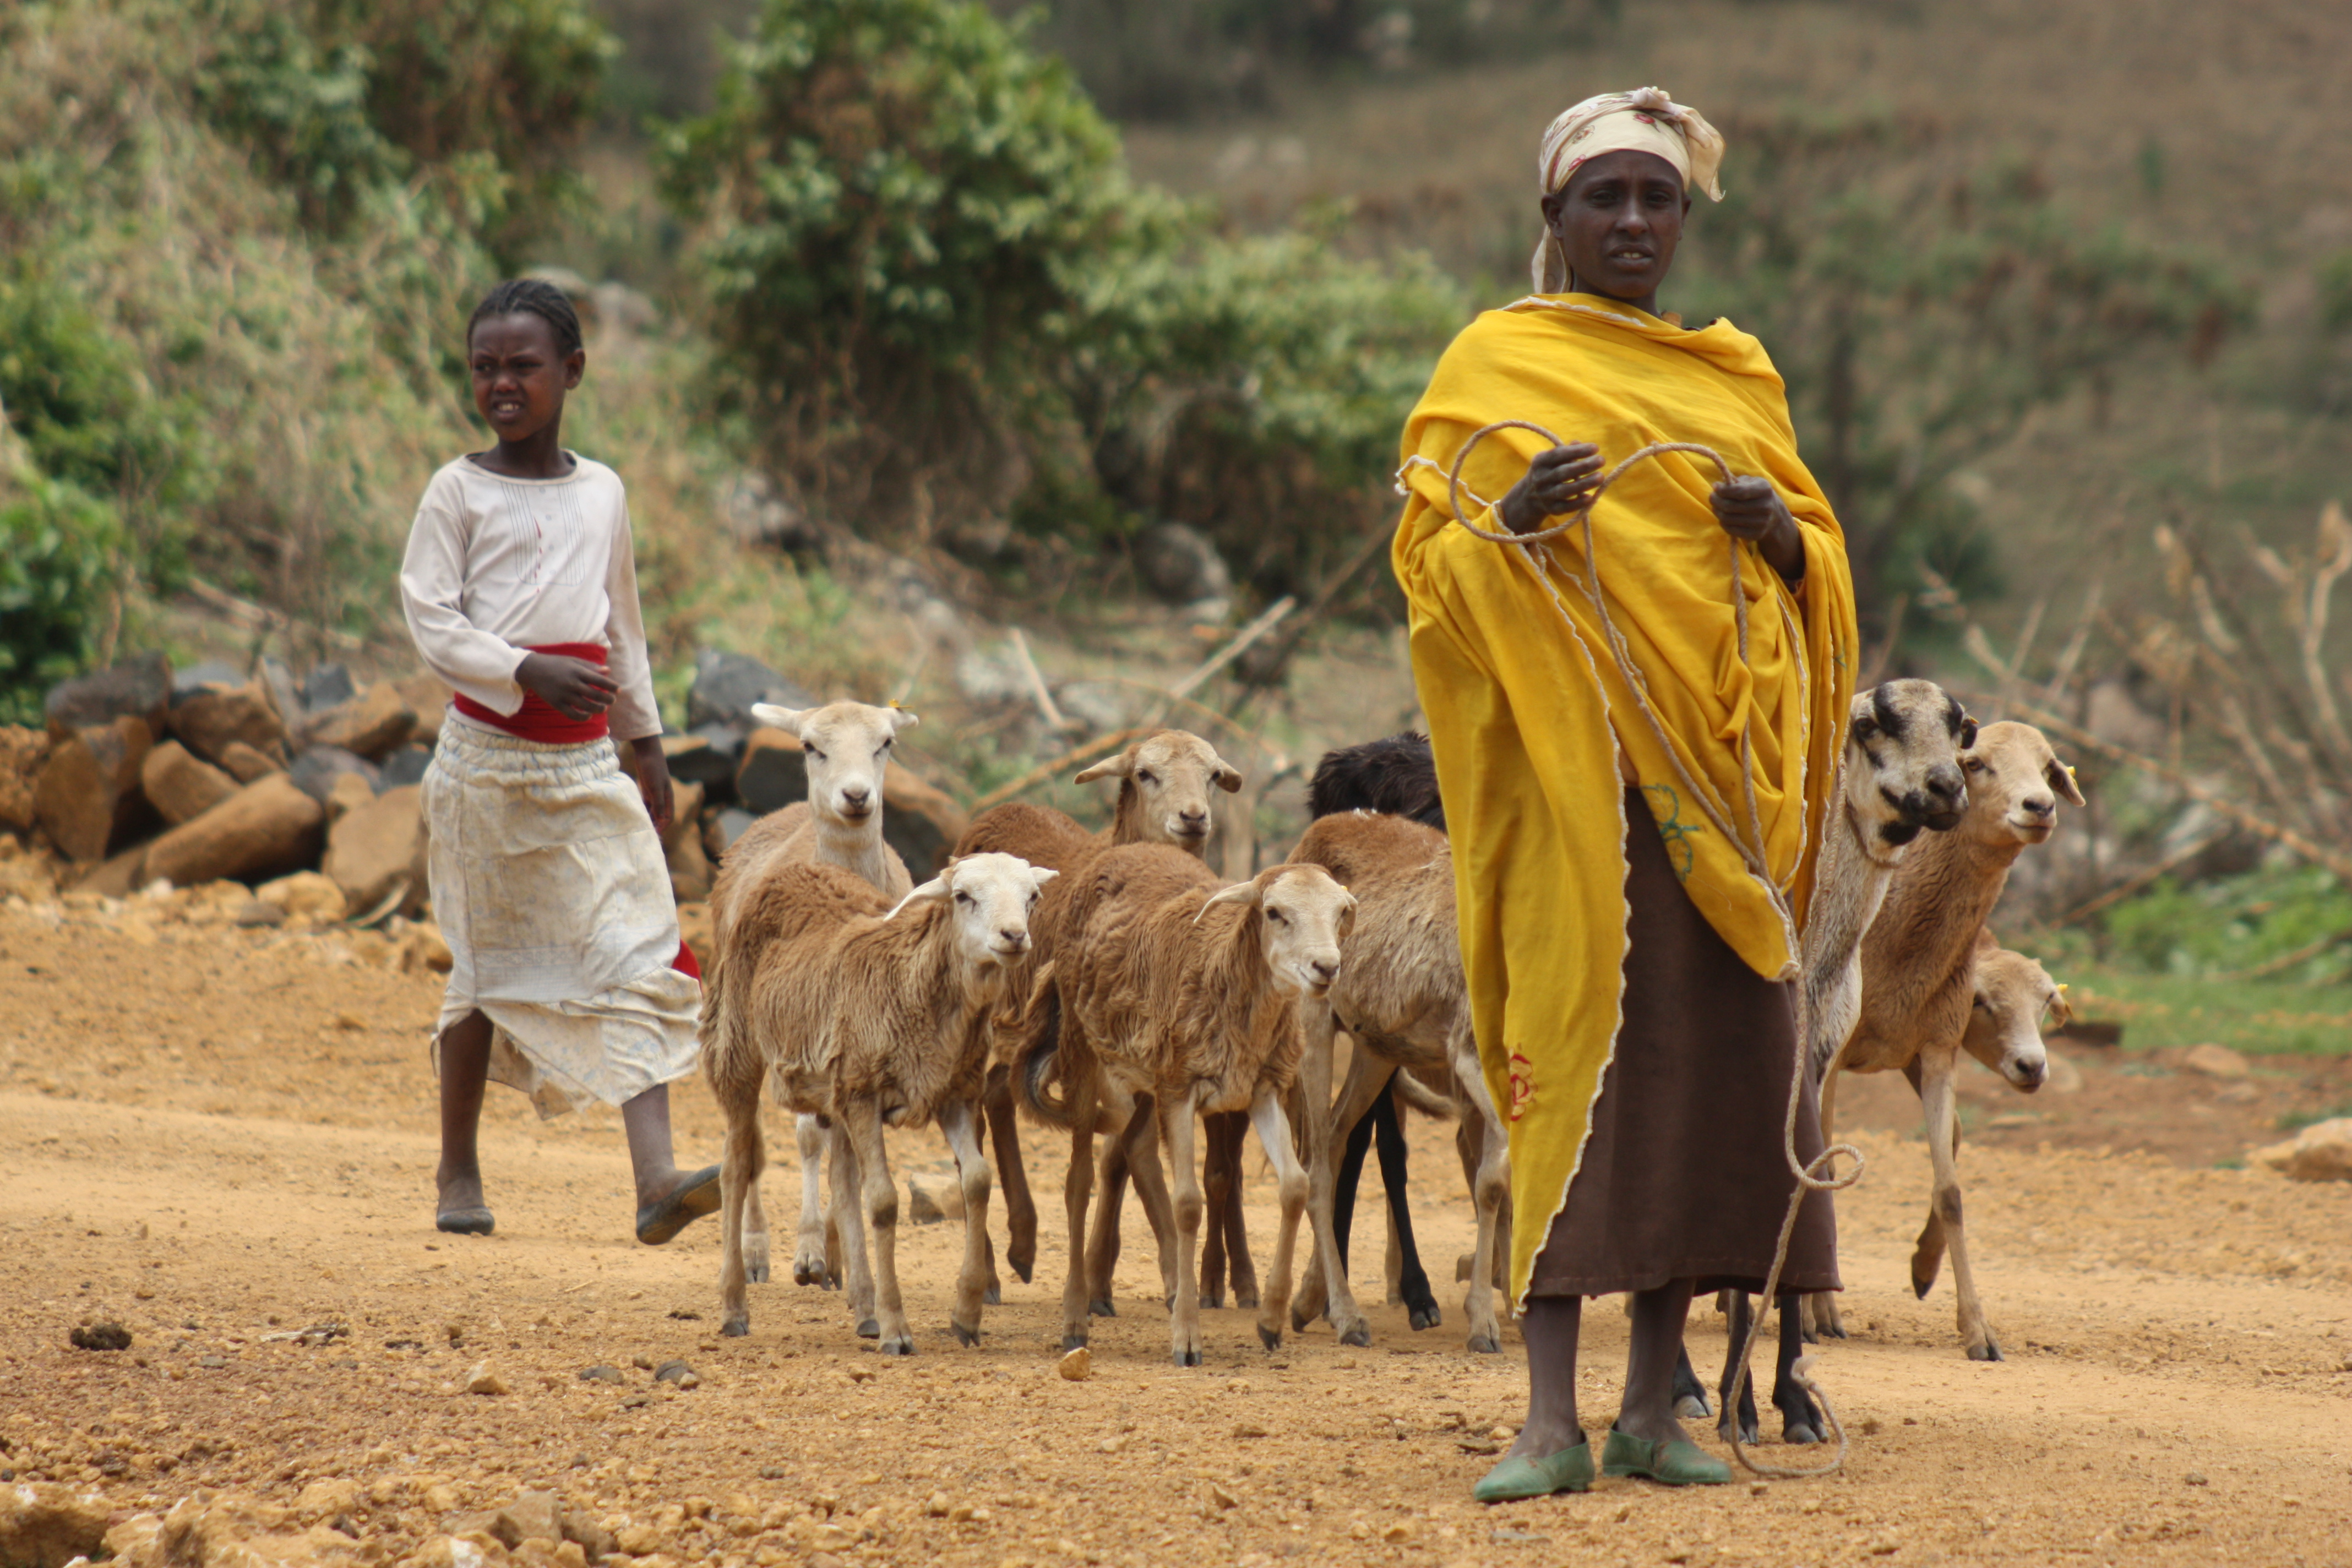 Taking sheep for disease testing in Bako, Ethiopia